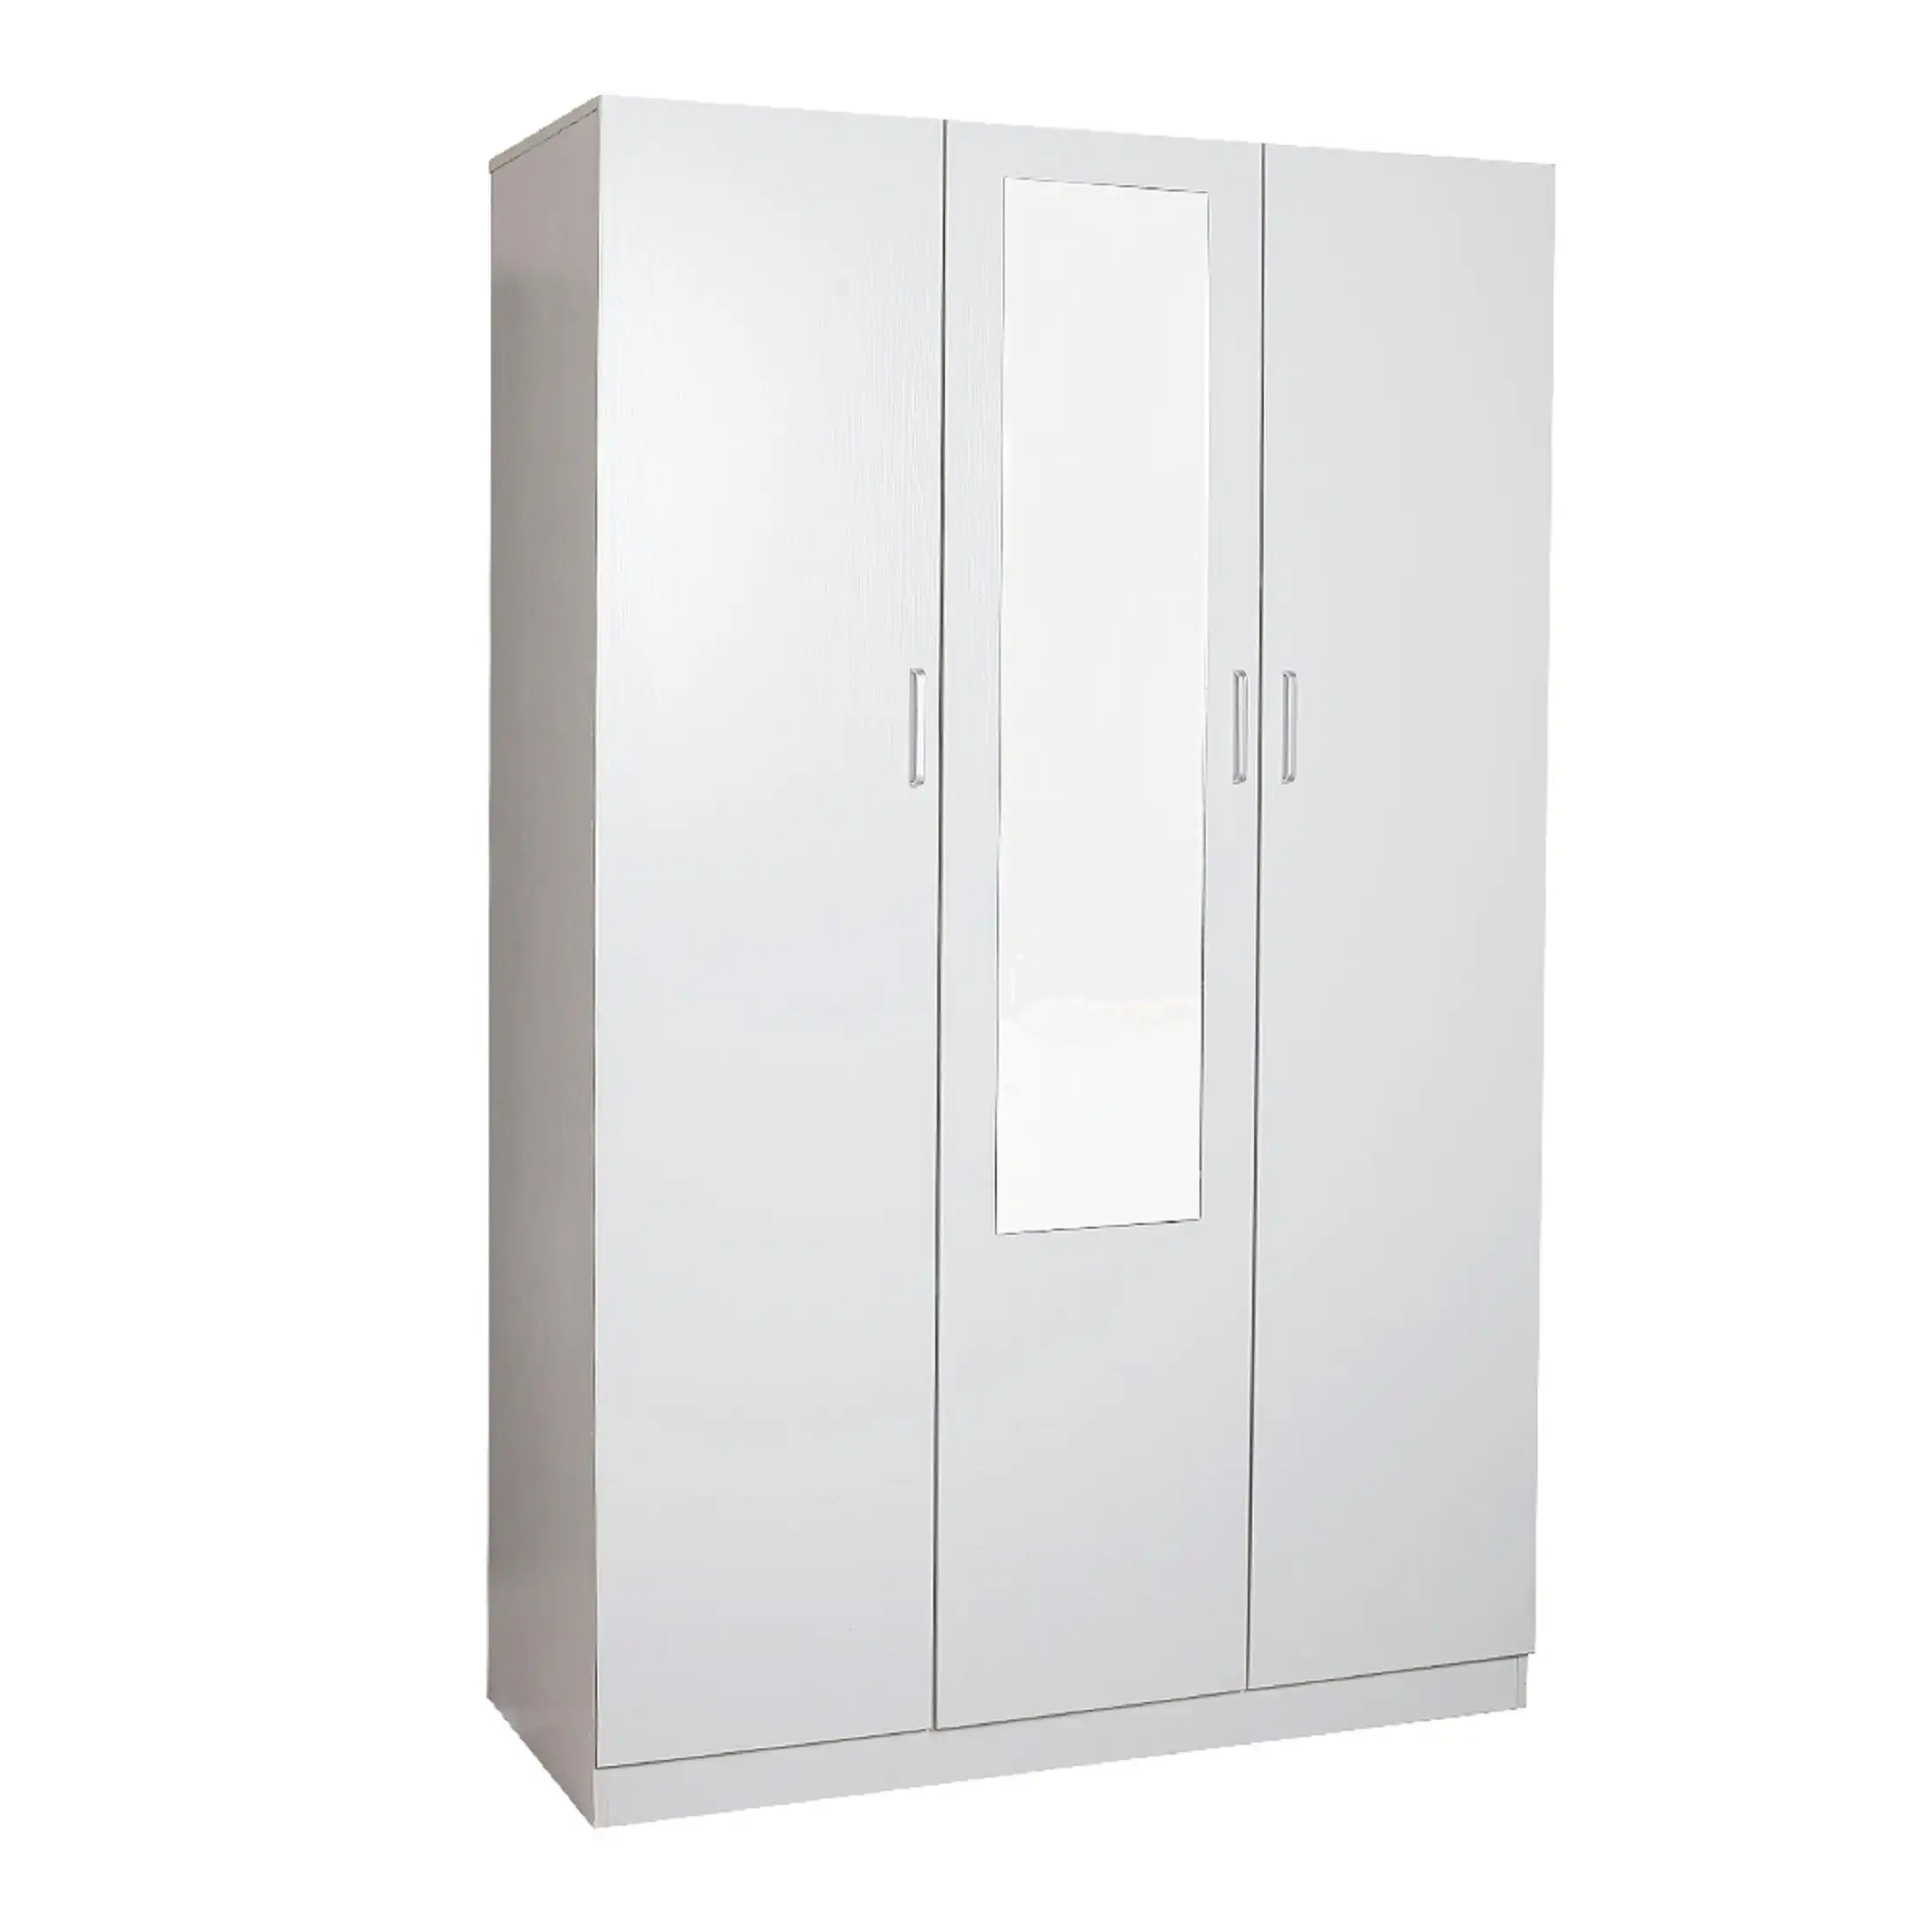 HEQS Redfern 3 Doors Combo with Mirror - White